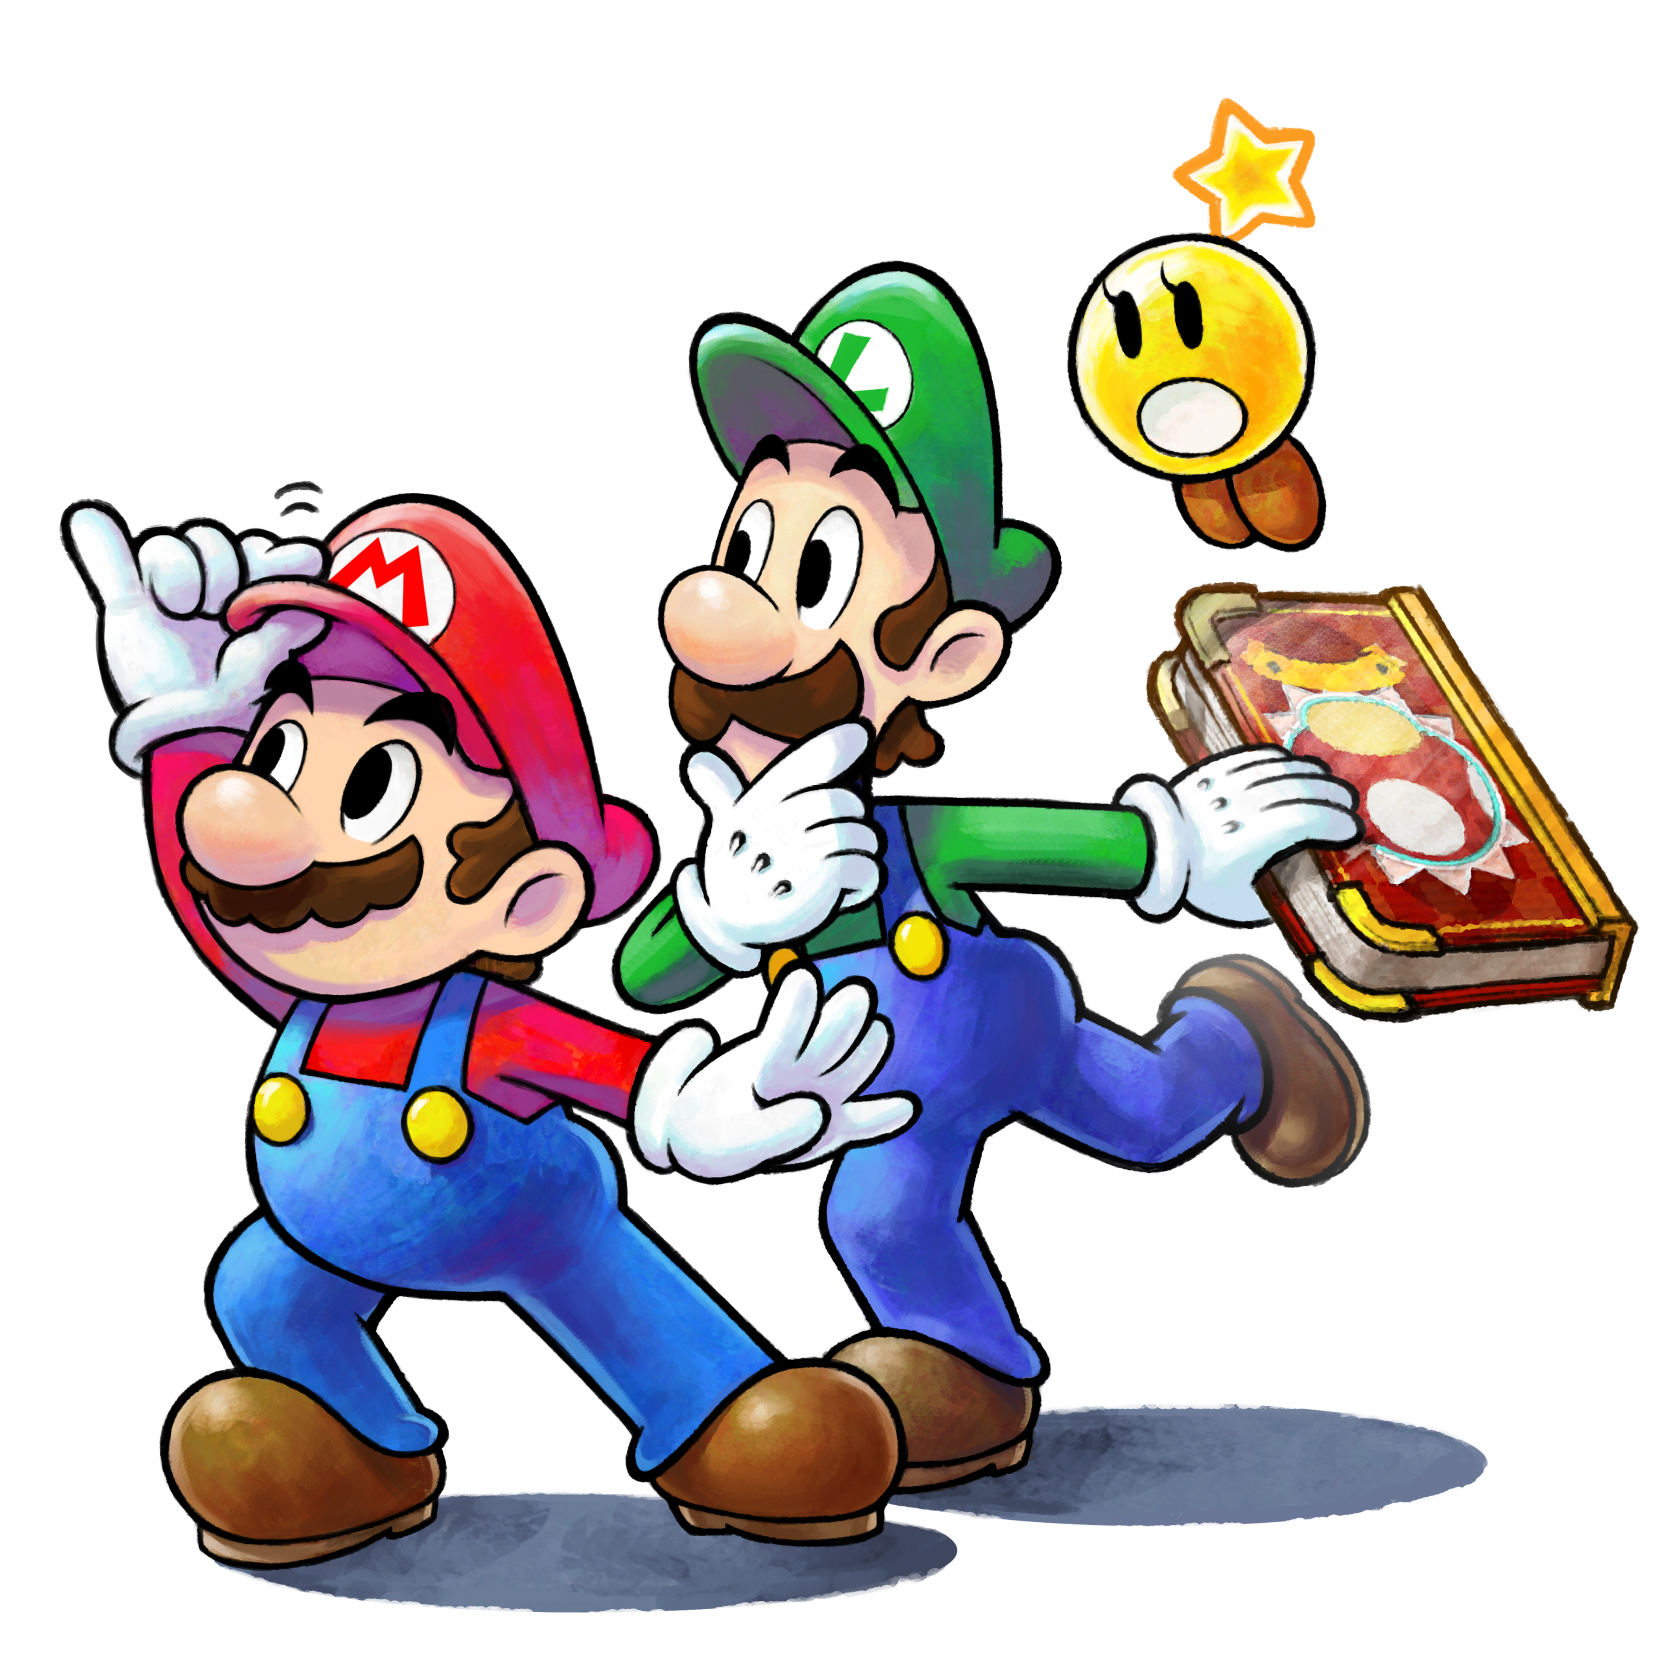 ［E3 2015］マリオとペーパーマリオが活躍する，3DS「マリオ＆ルイージRPG ペーパーマリオMIX」が2015年内に発売［E3 2015］マリオとペーパーマリオが活躍する，3DS「マリオ＆ルイージRPG ペーパーマリオMIX」が2015年内に発売